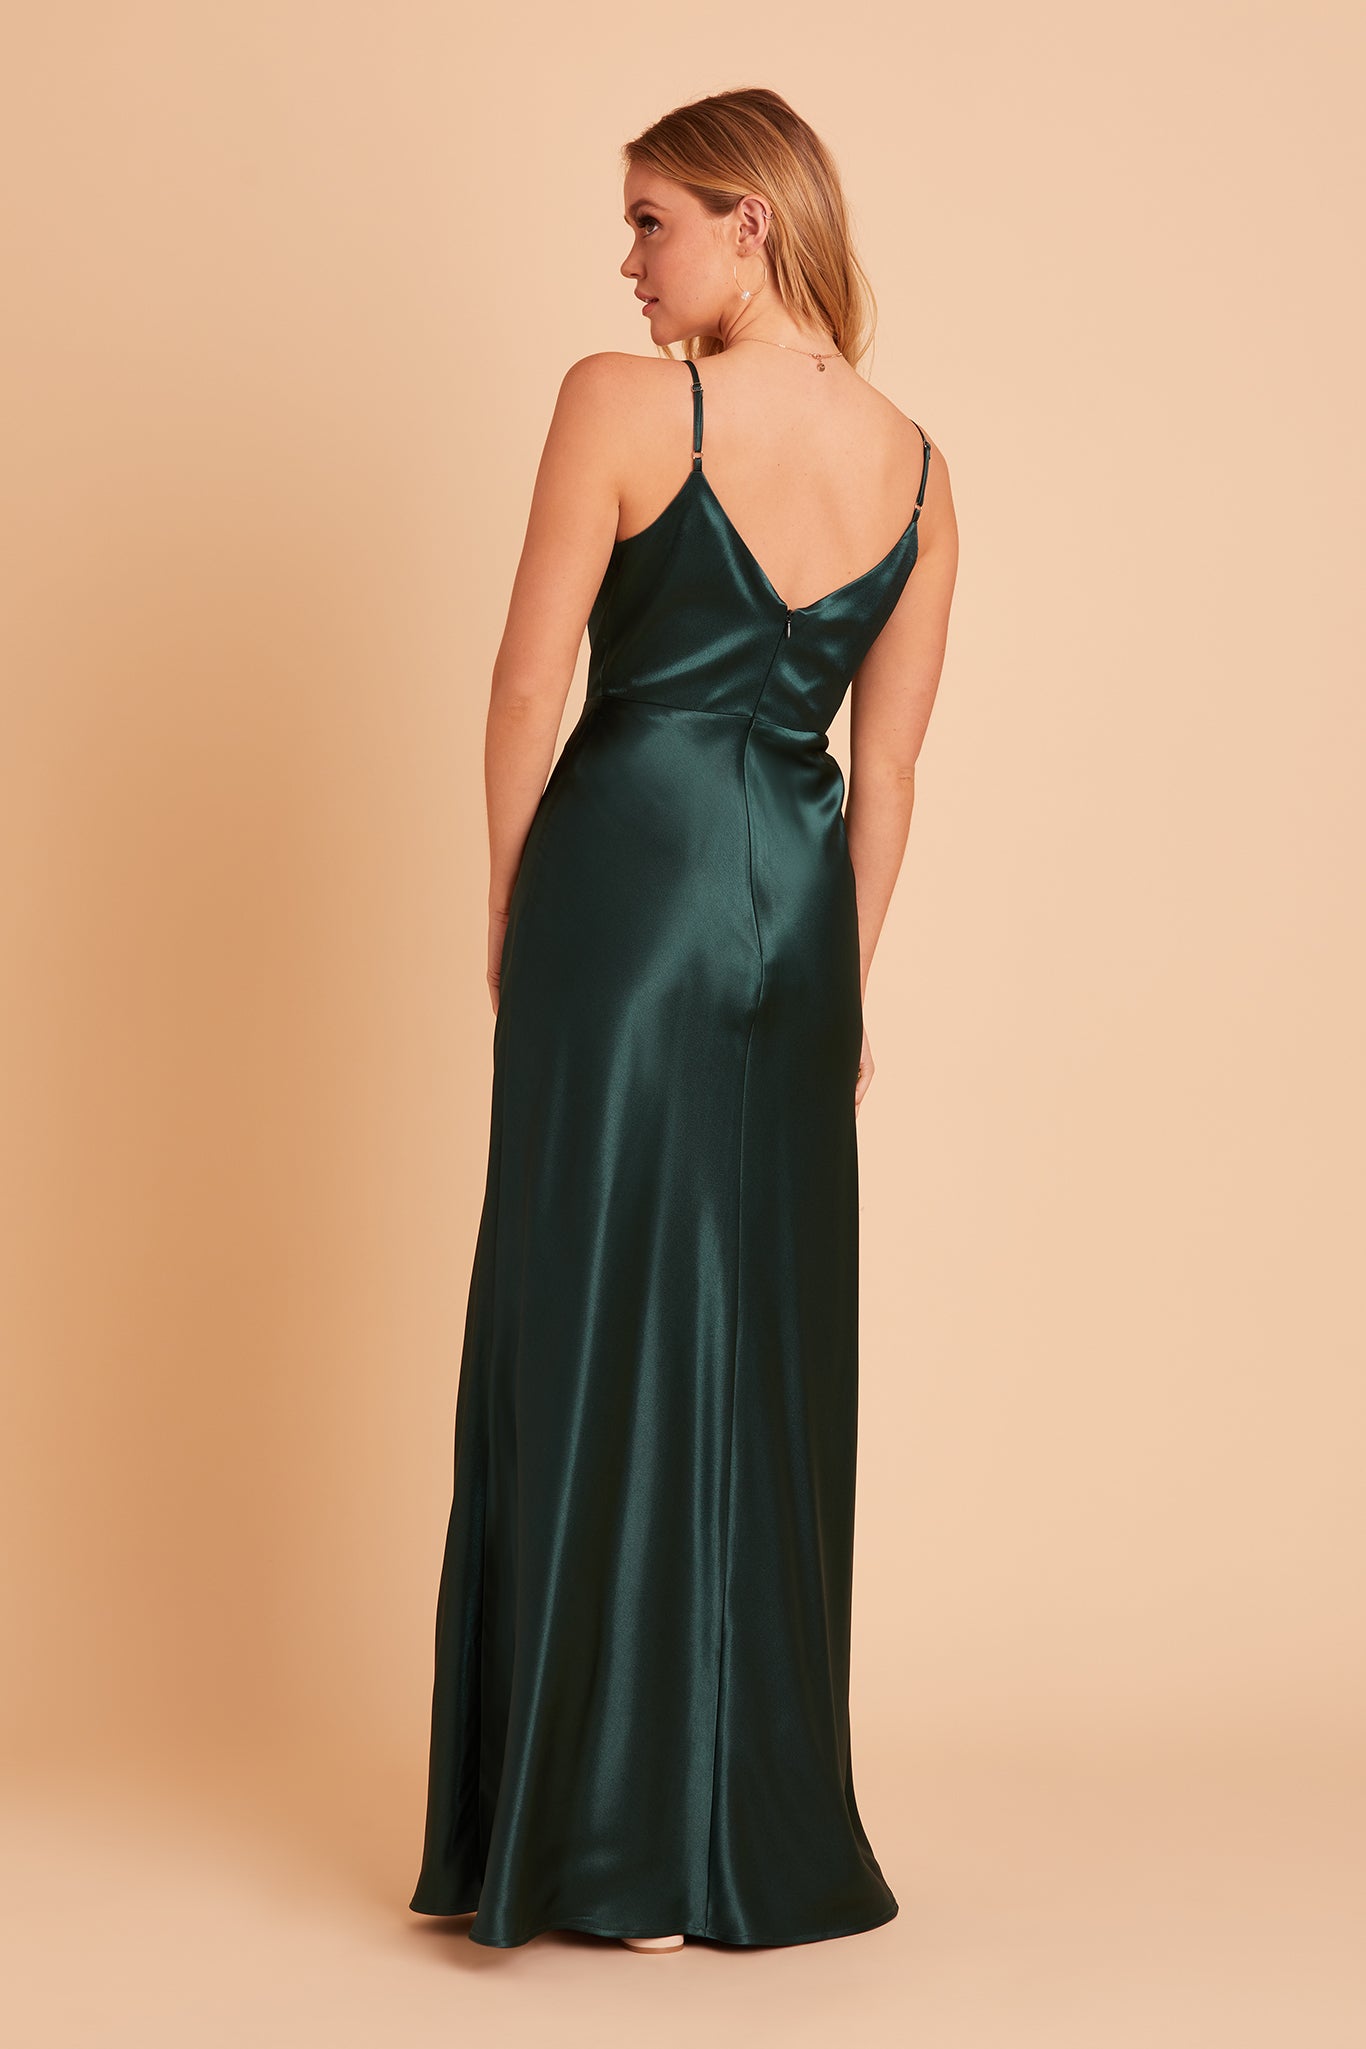 Emerald Jay Shiny Satin Dress by Birdy Grey